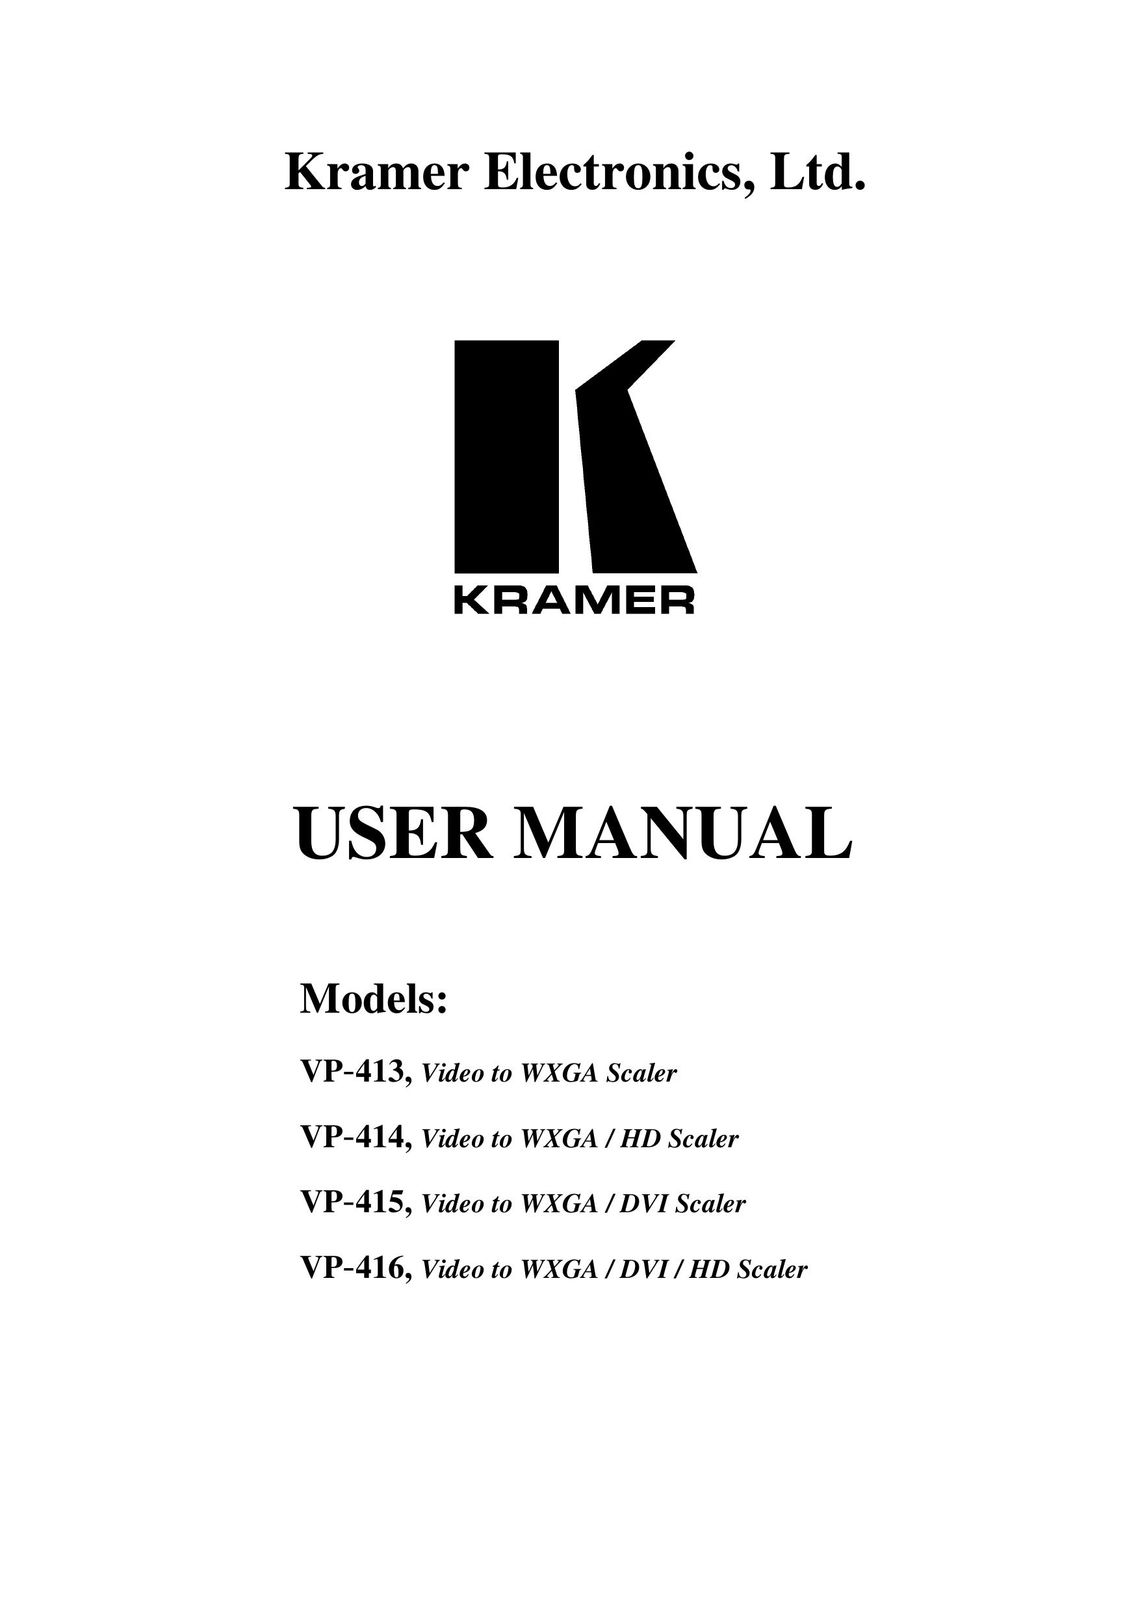 Kramer Electronics VP-414 TV Video Accessories User Manual